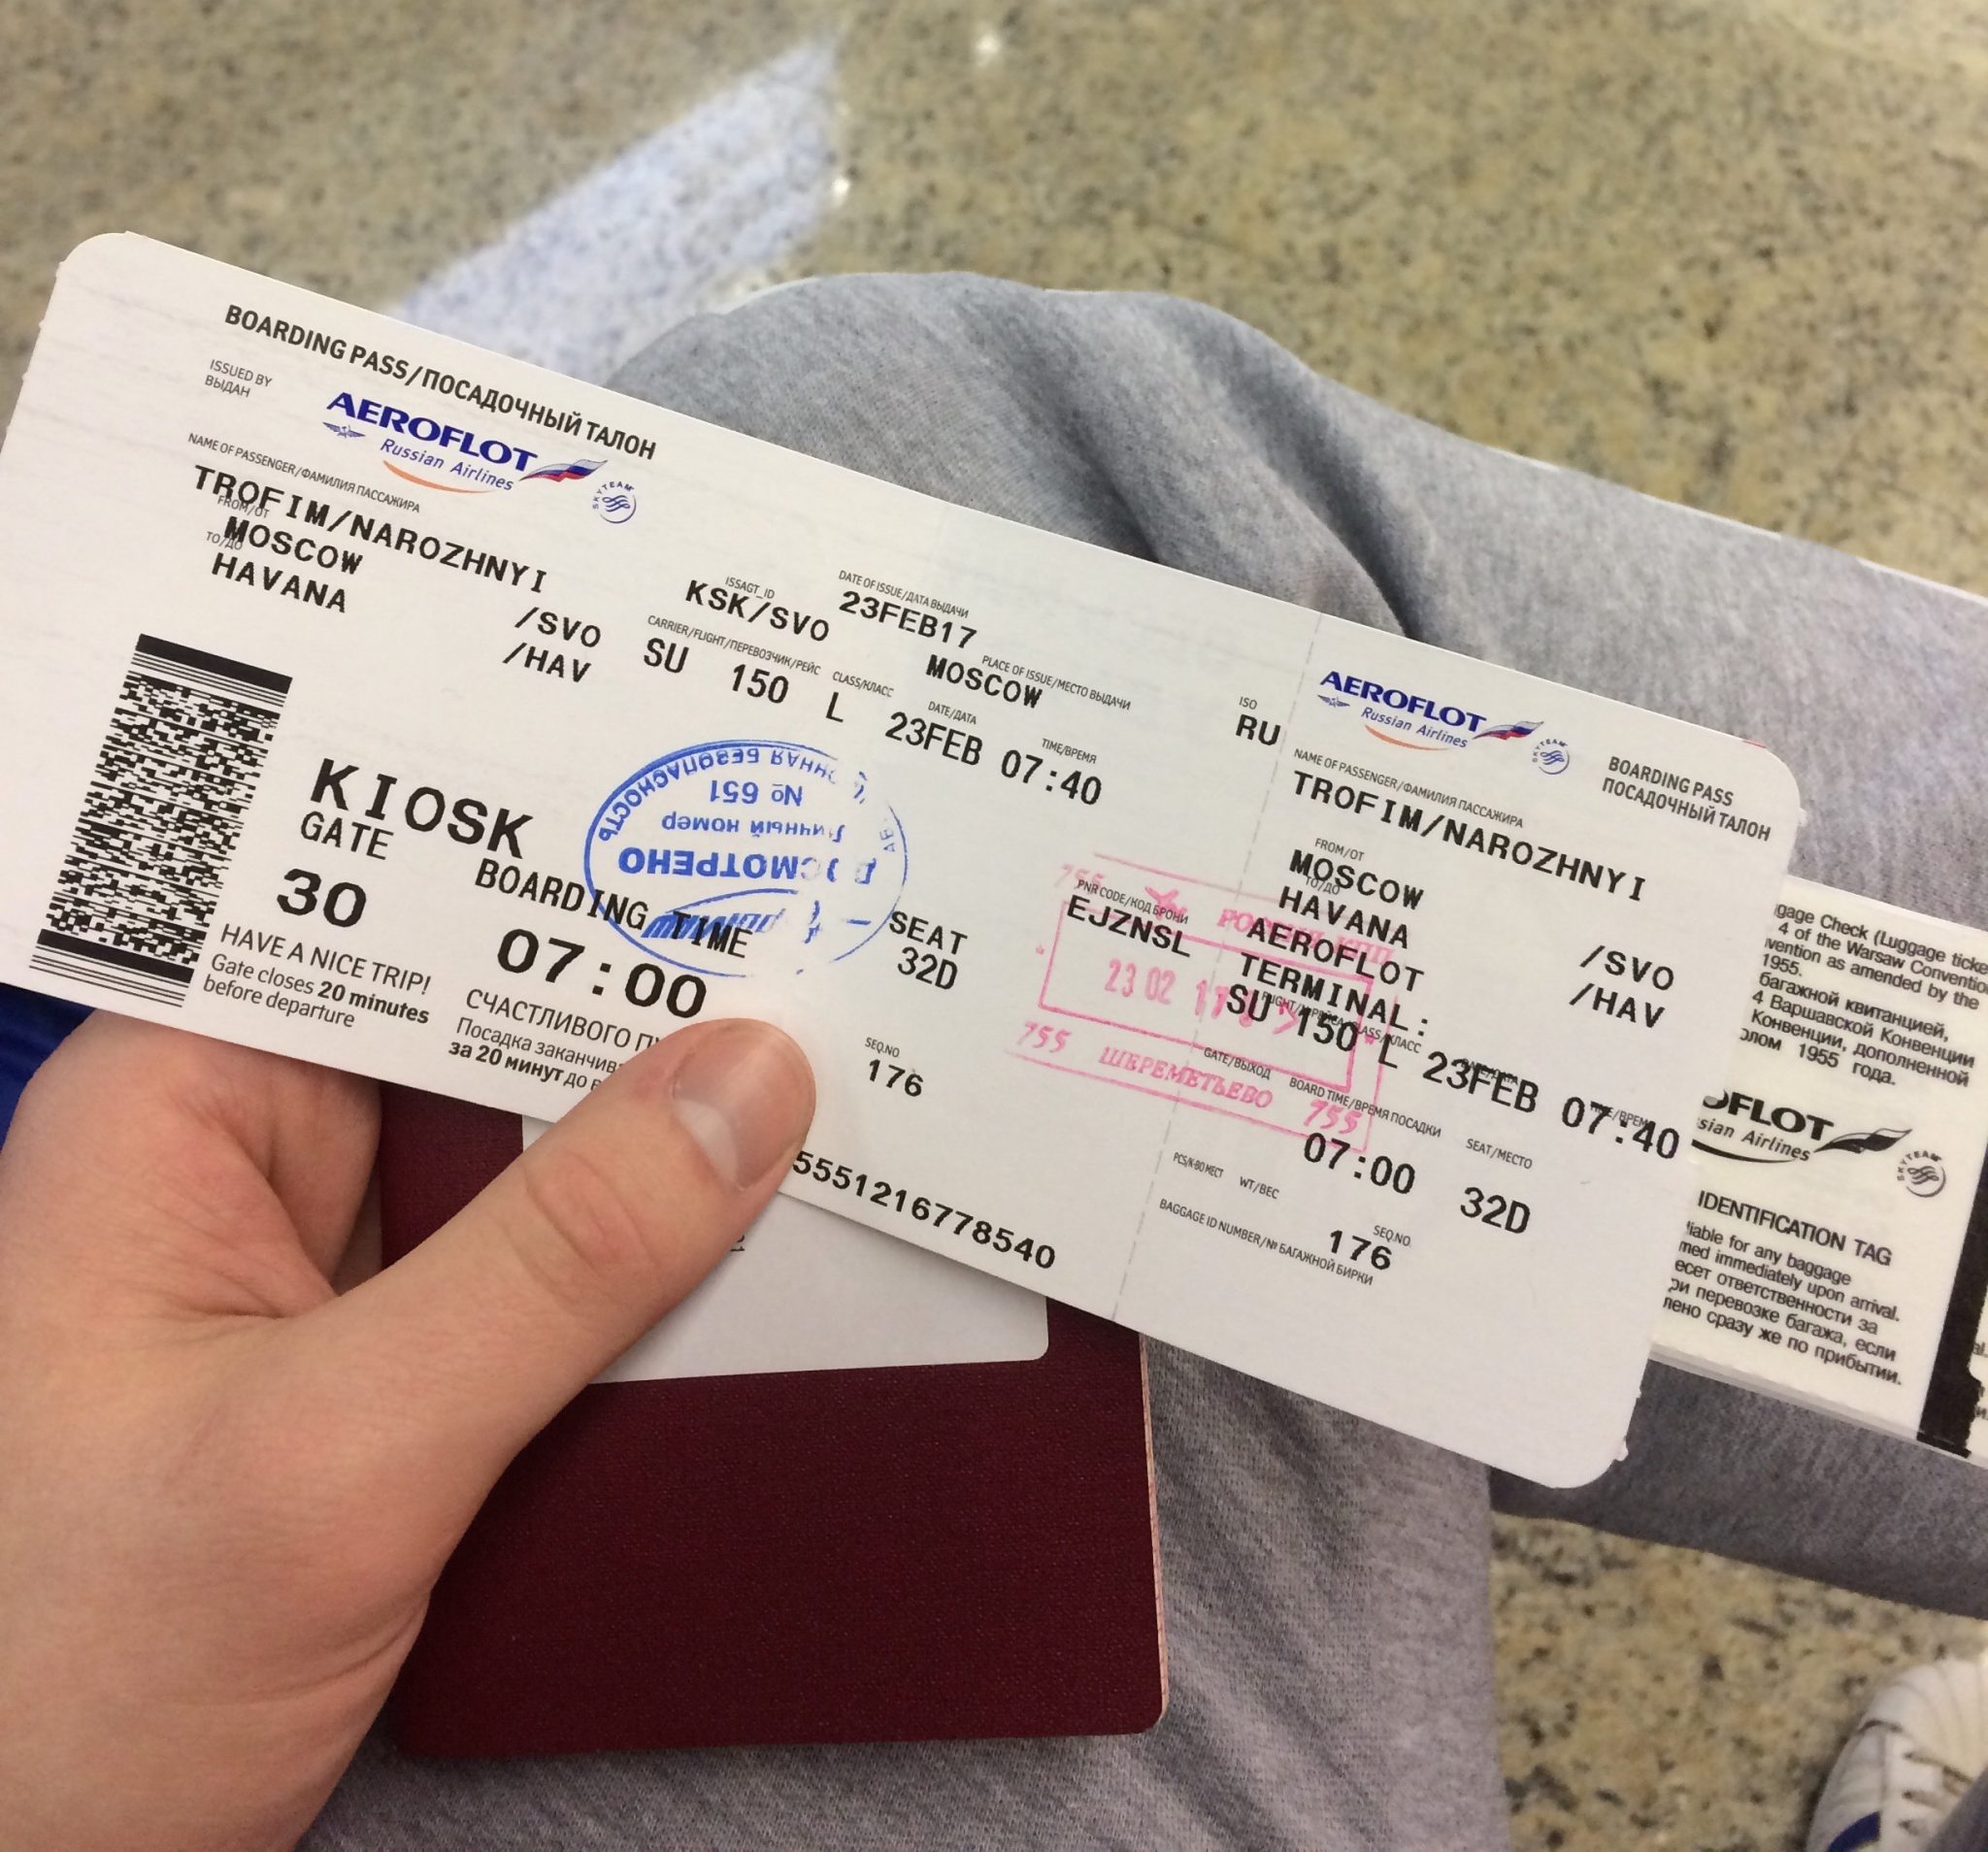 билет на самолет запорожье москва цена